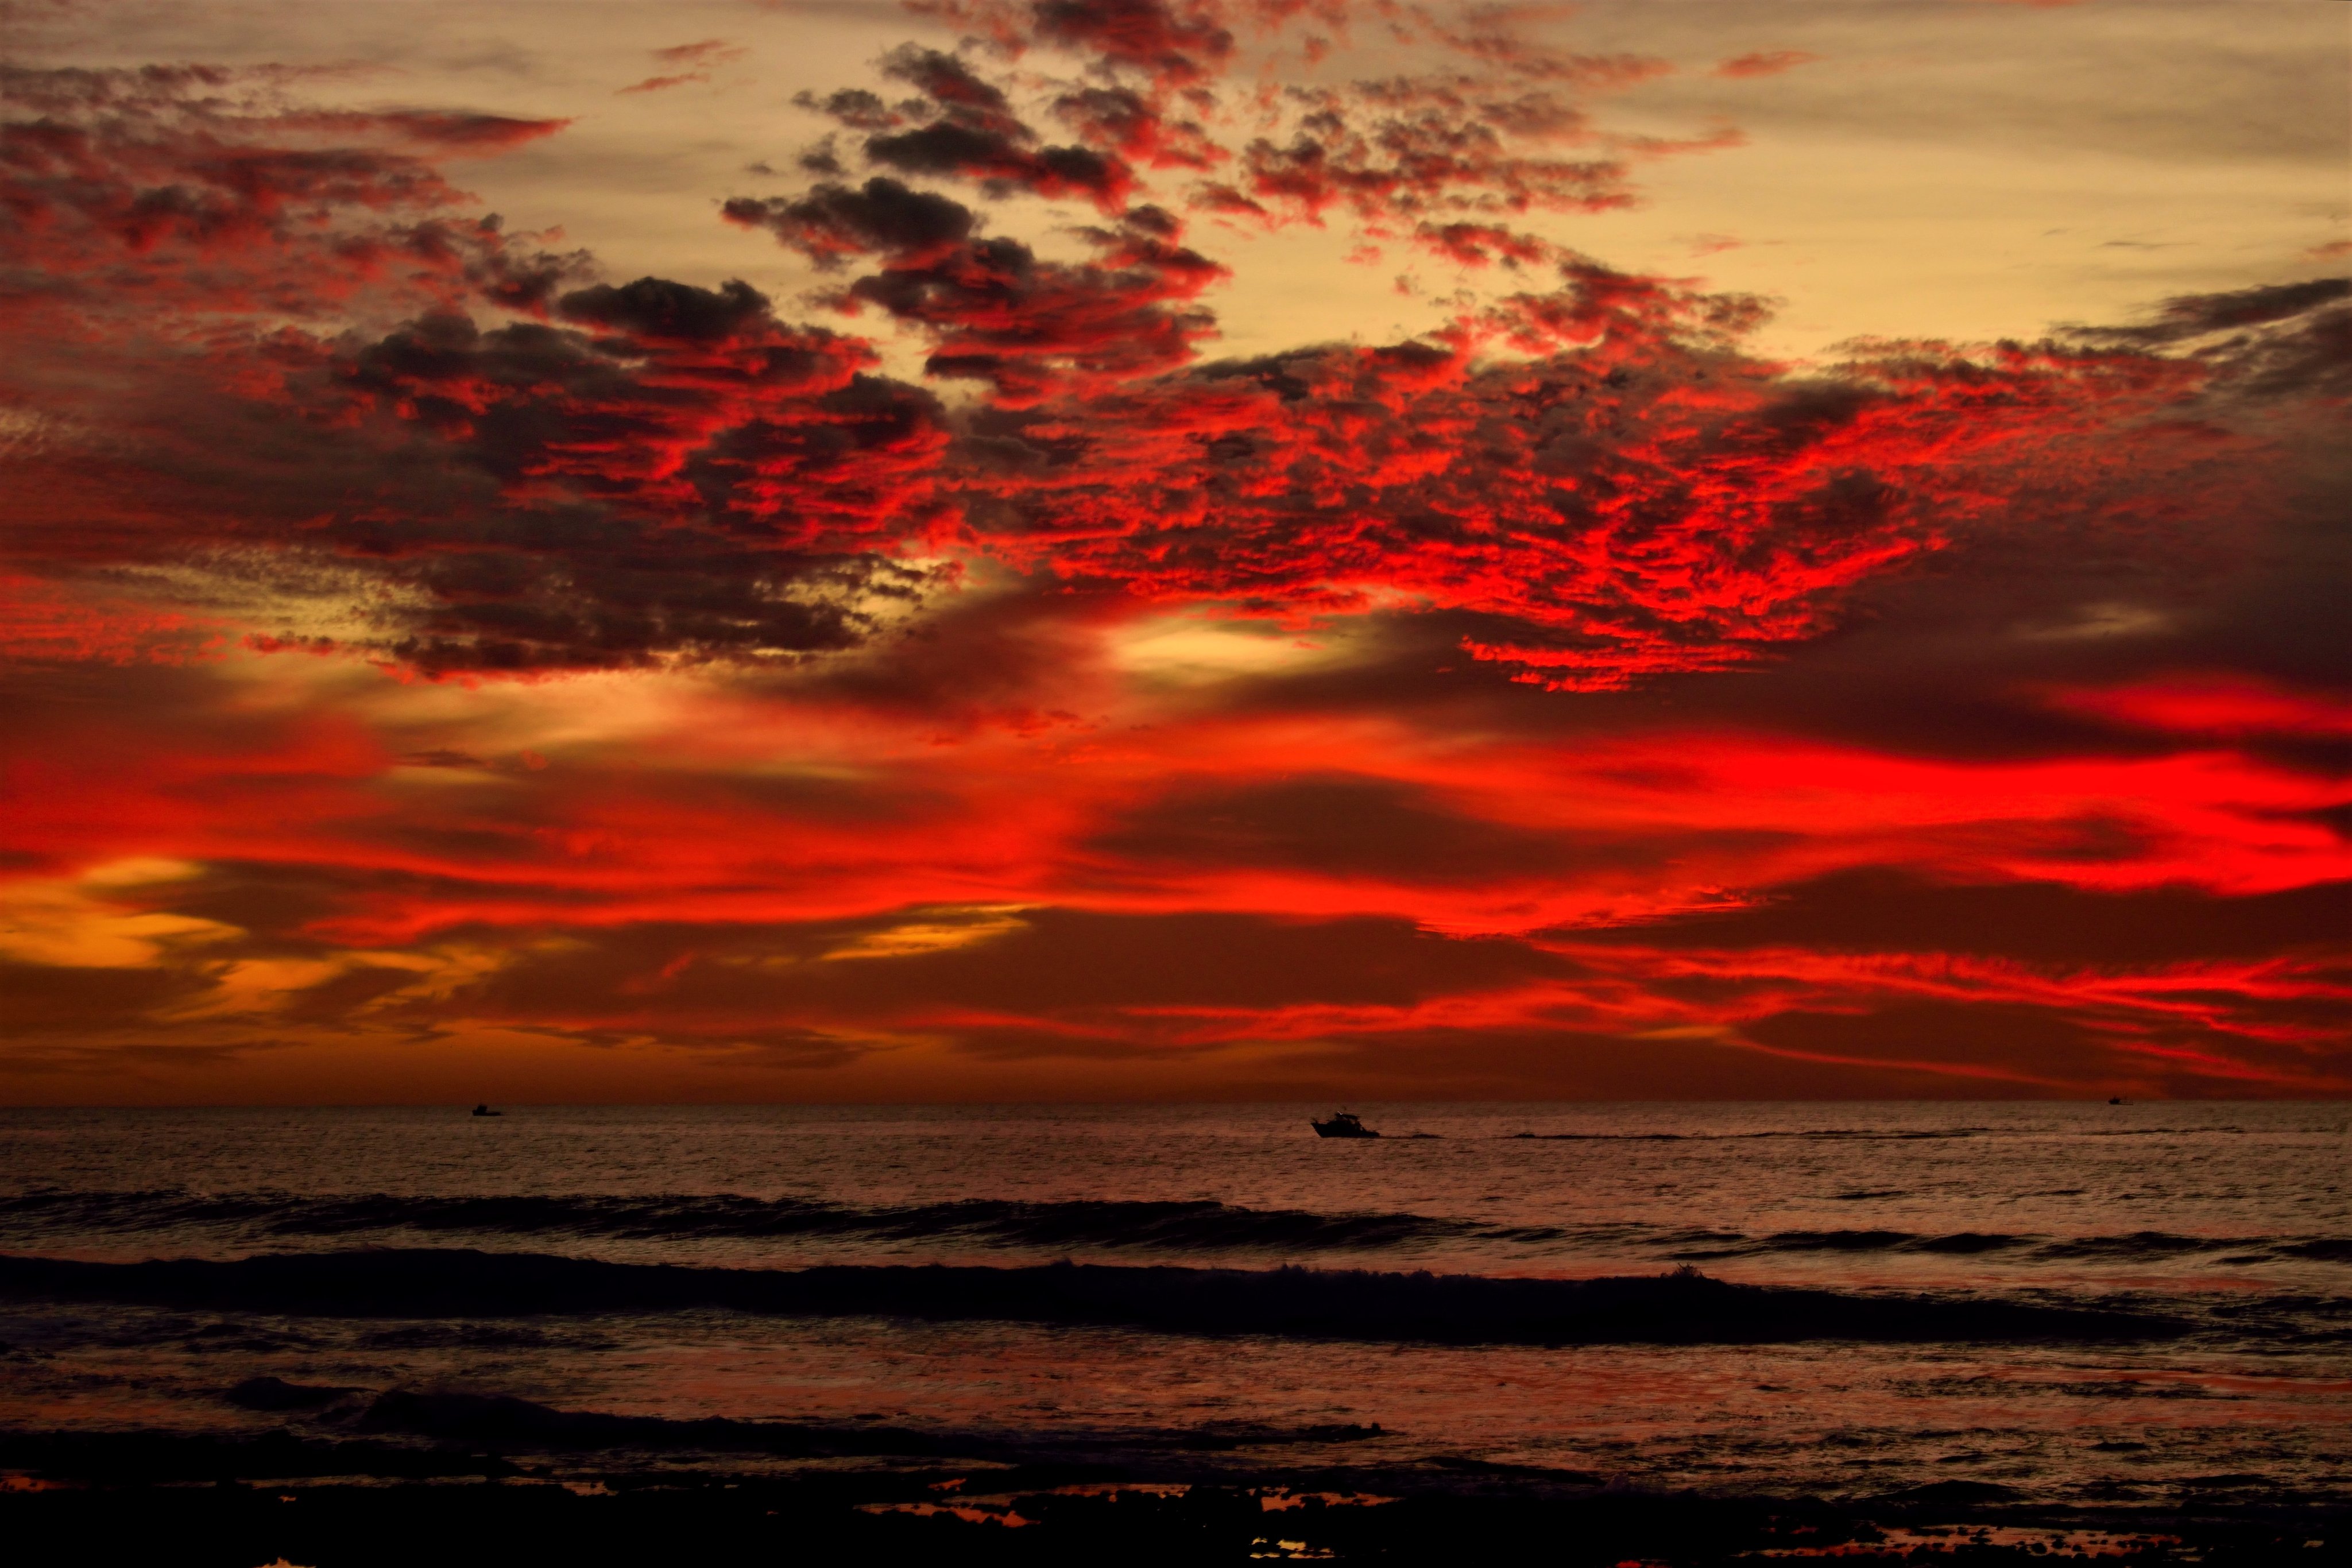 A wonderful sunset afterglow from Tenerife by Jane Brook @jayceb19